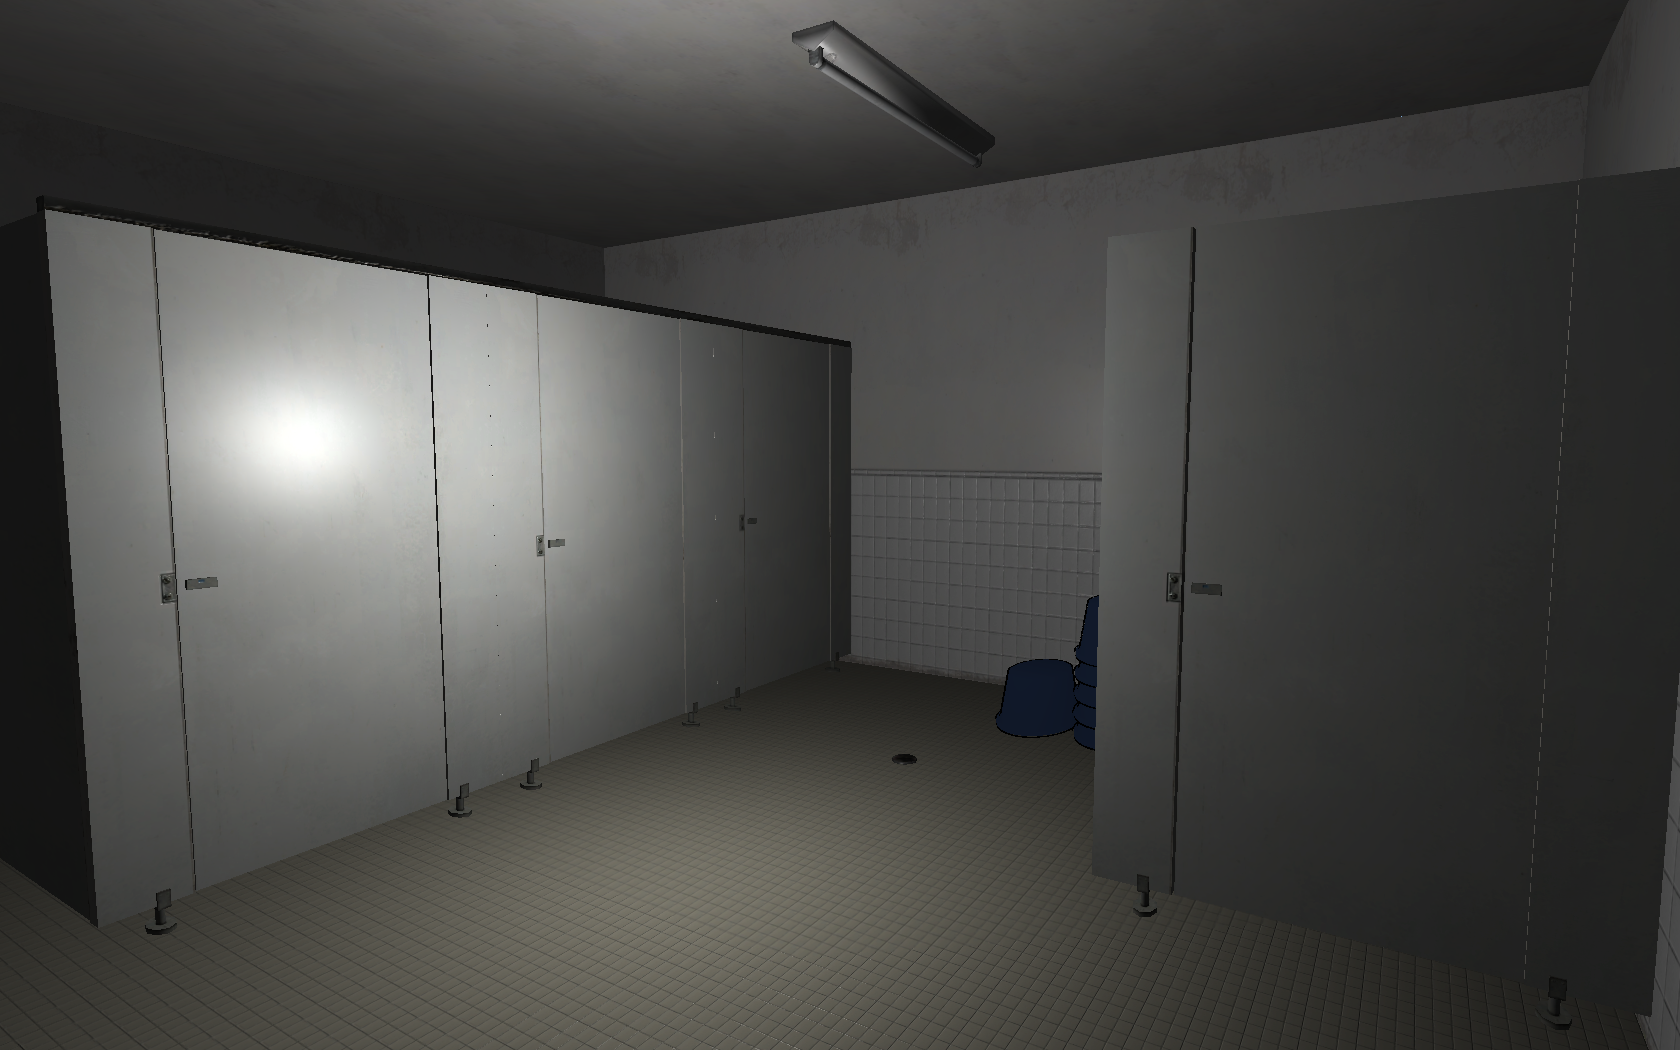 The Bathroom Simulator Image Of Bathroom And Closet - public bathroom simulator roblox